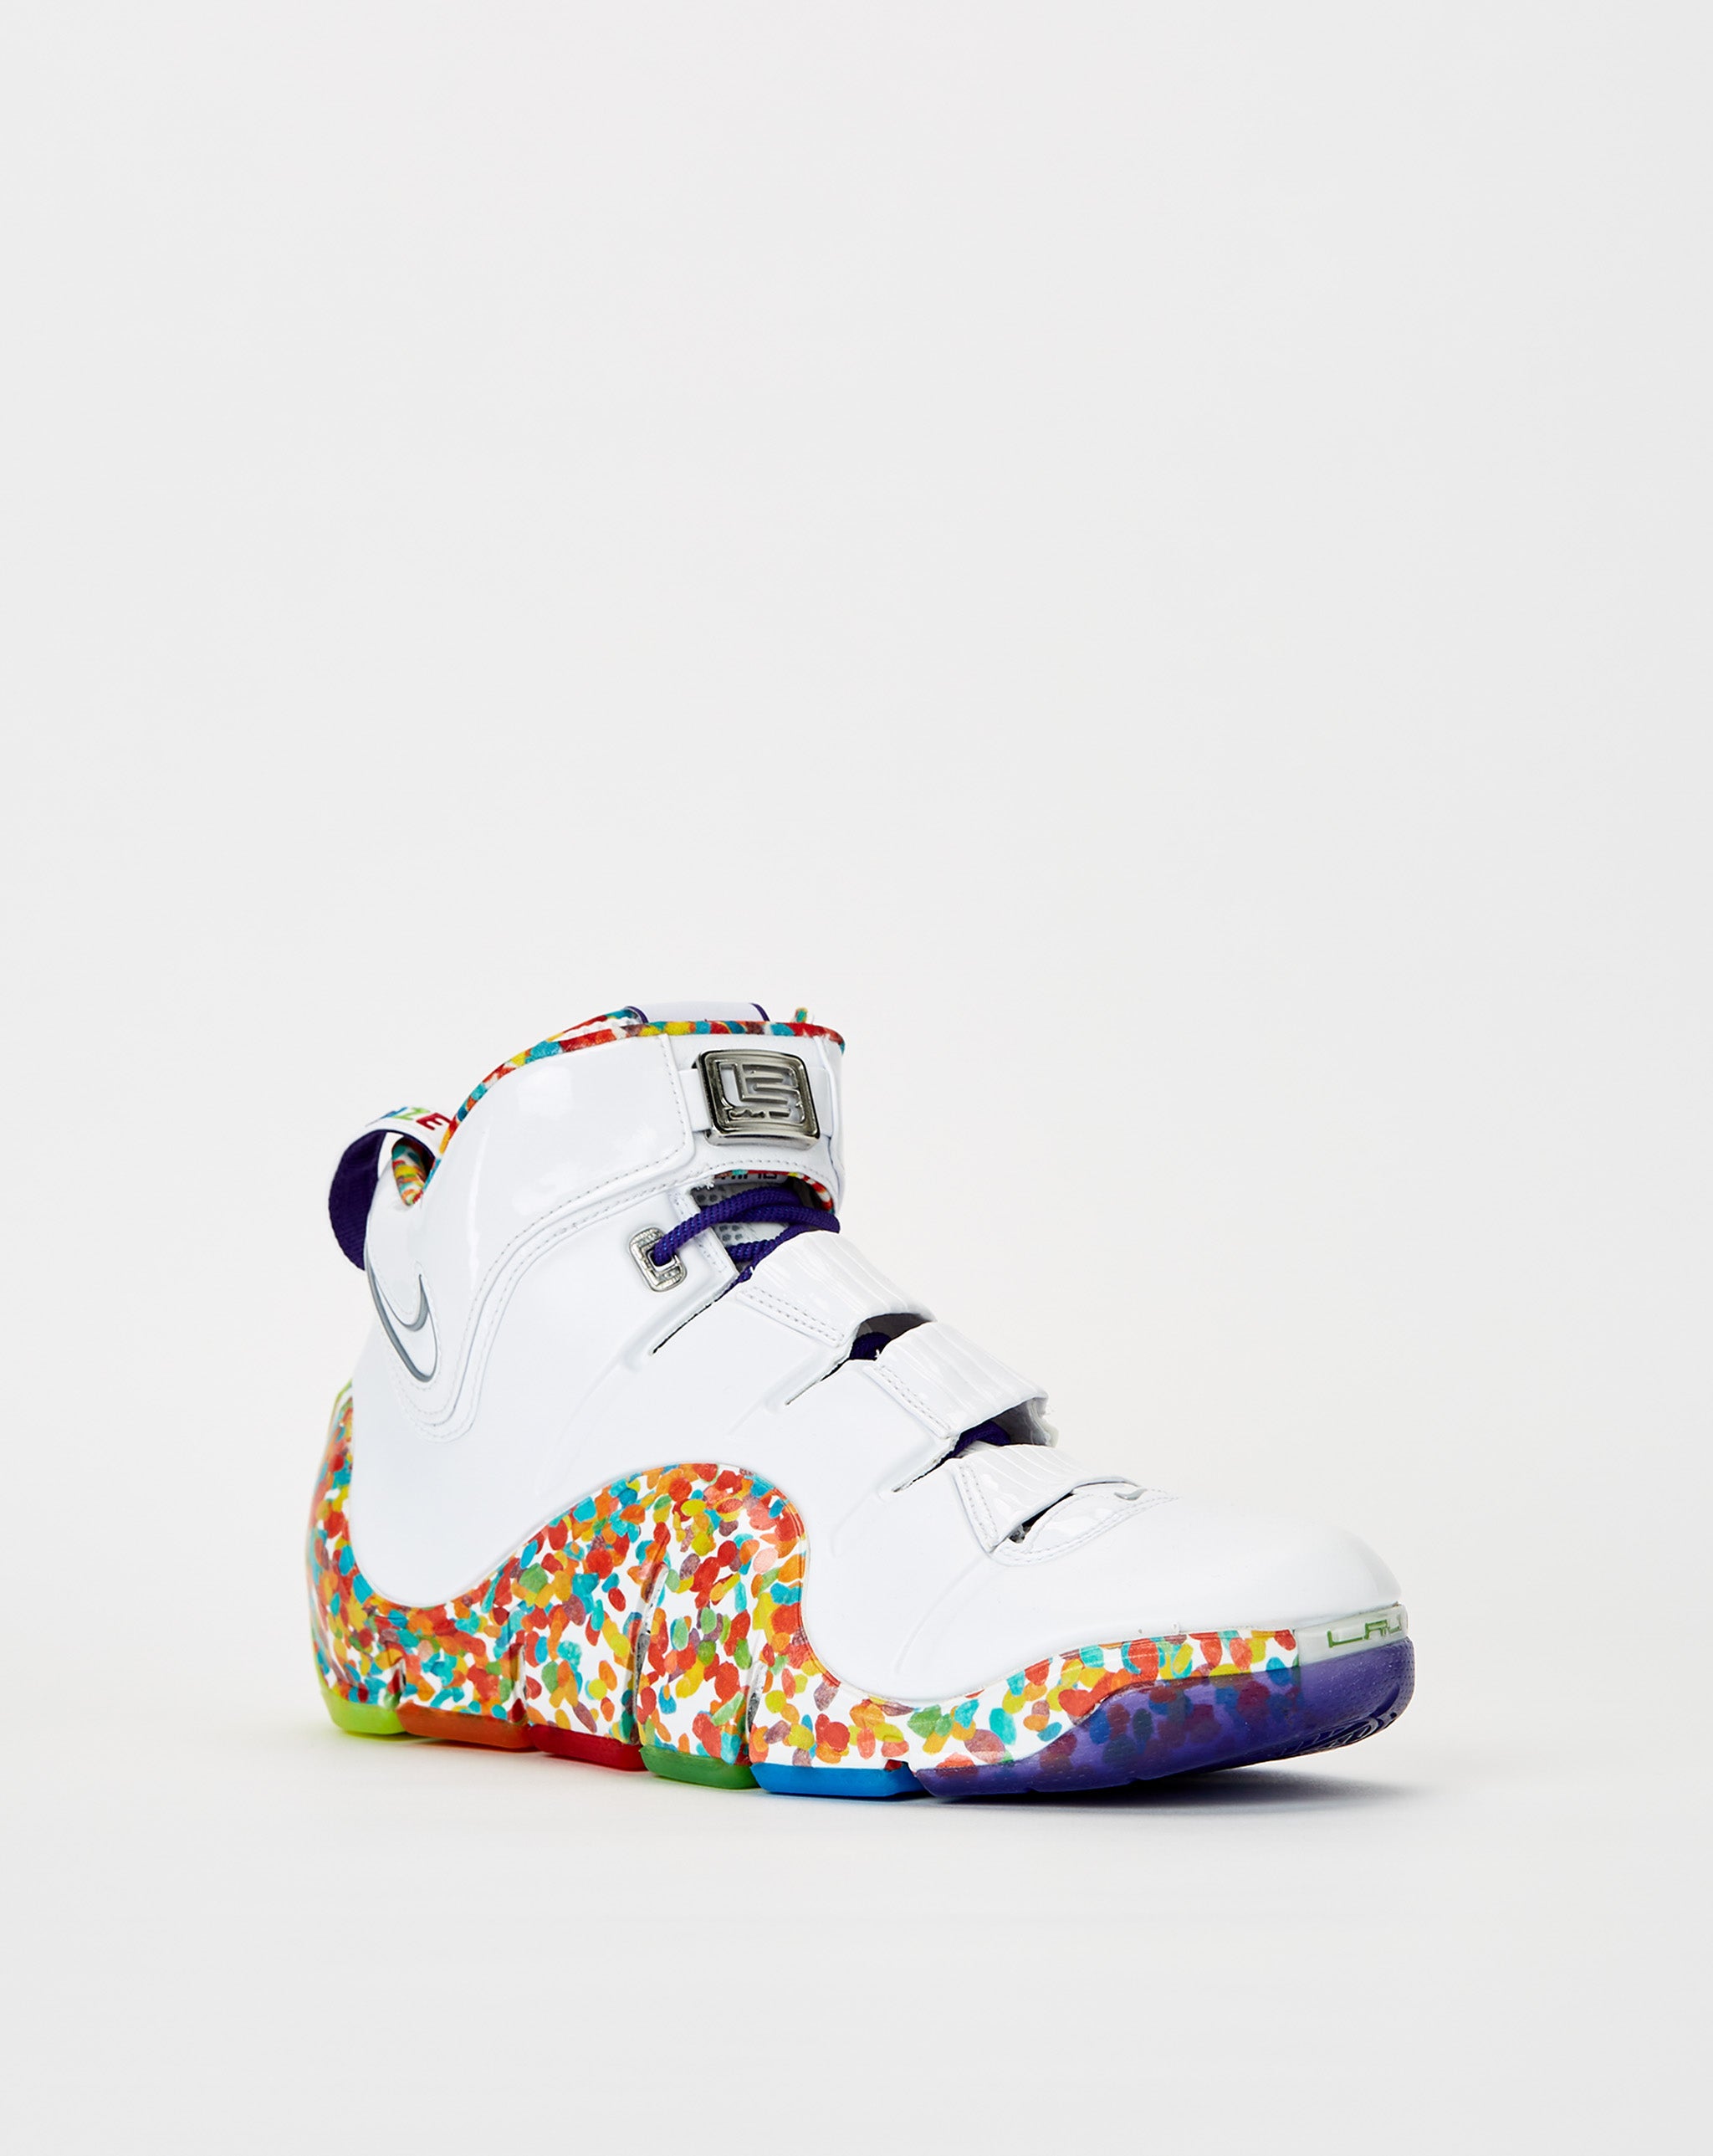 Nike LeBron IV 'Fruity Pebbles'  - XHIBITION